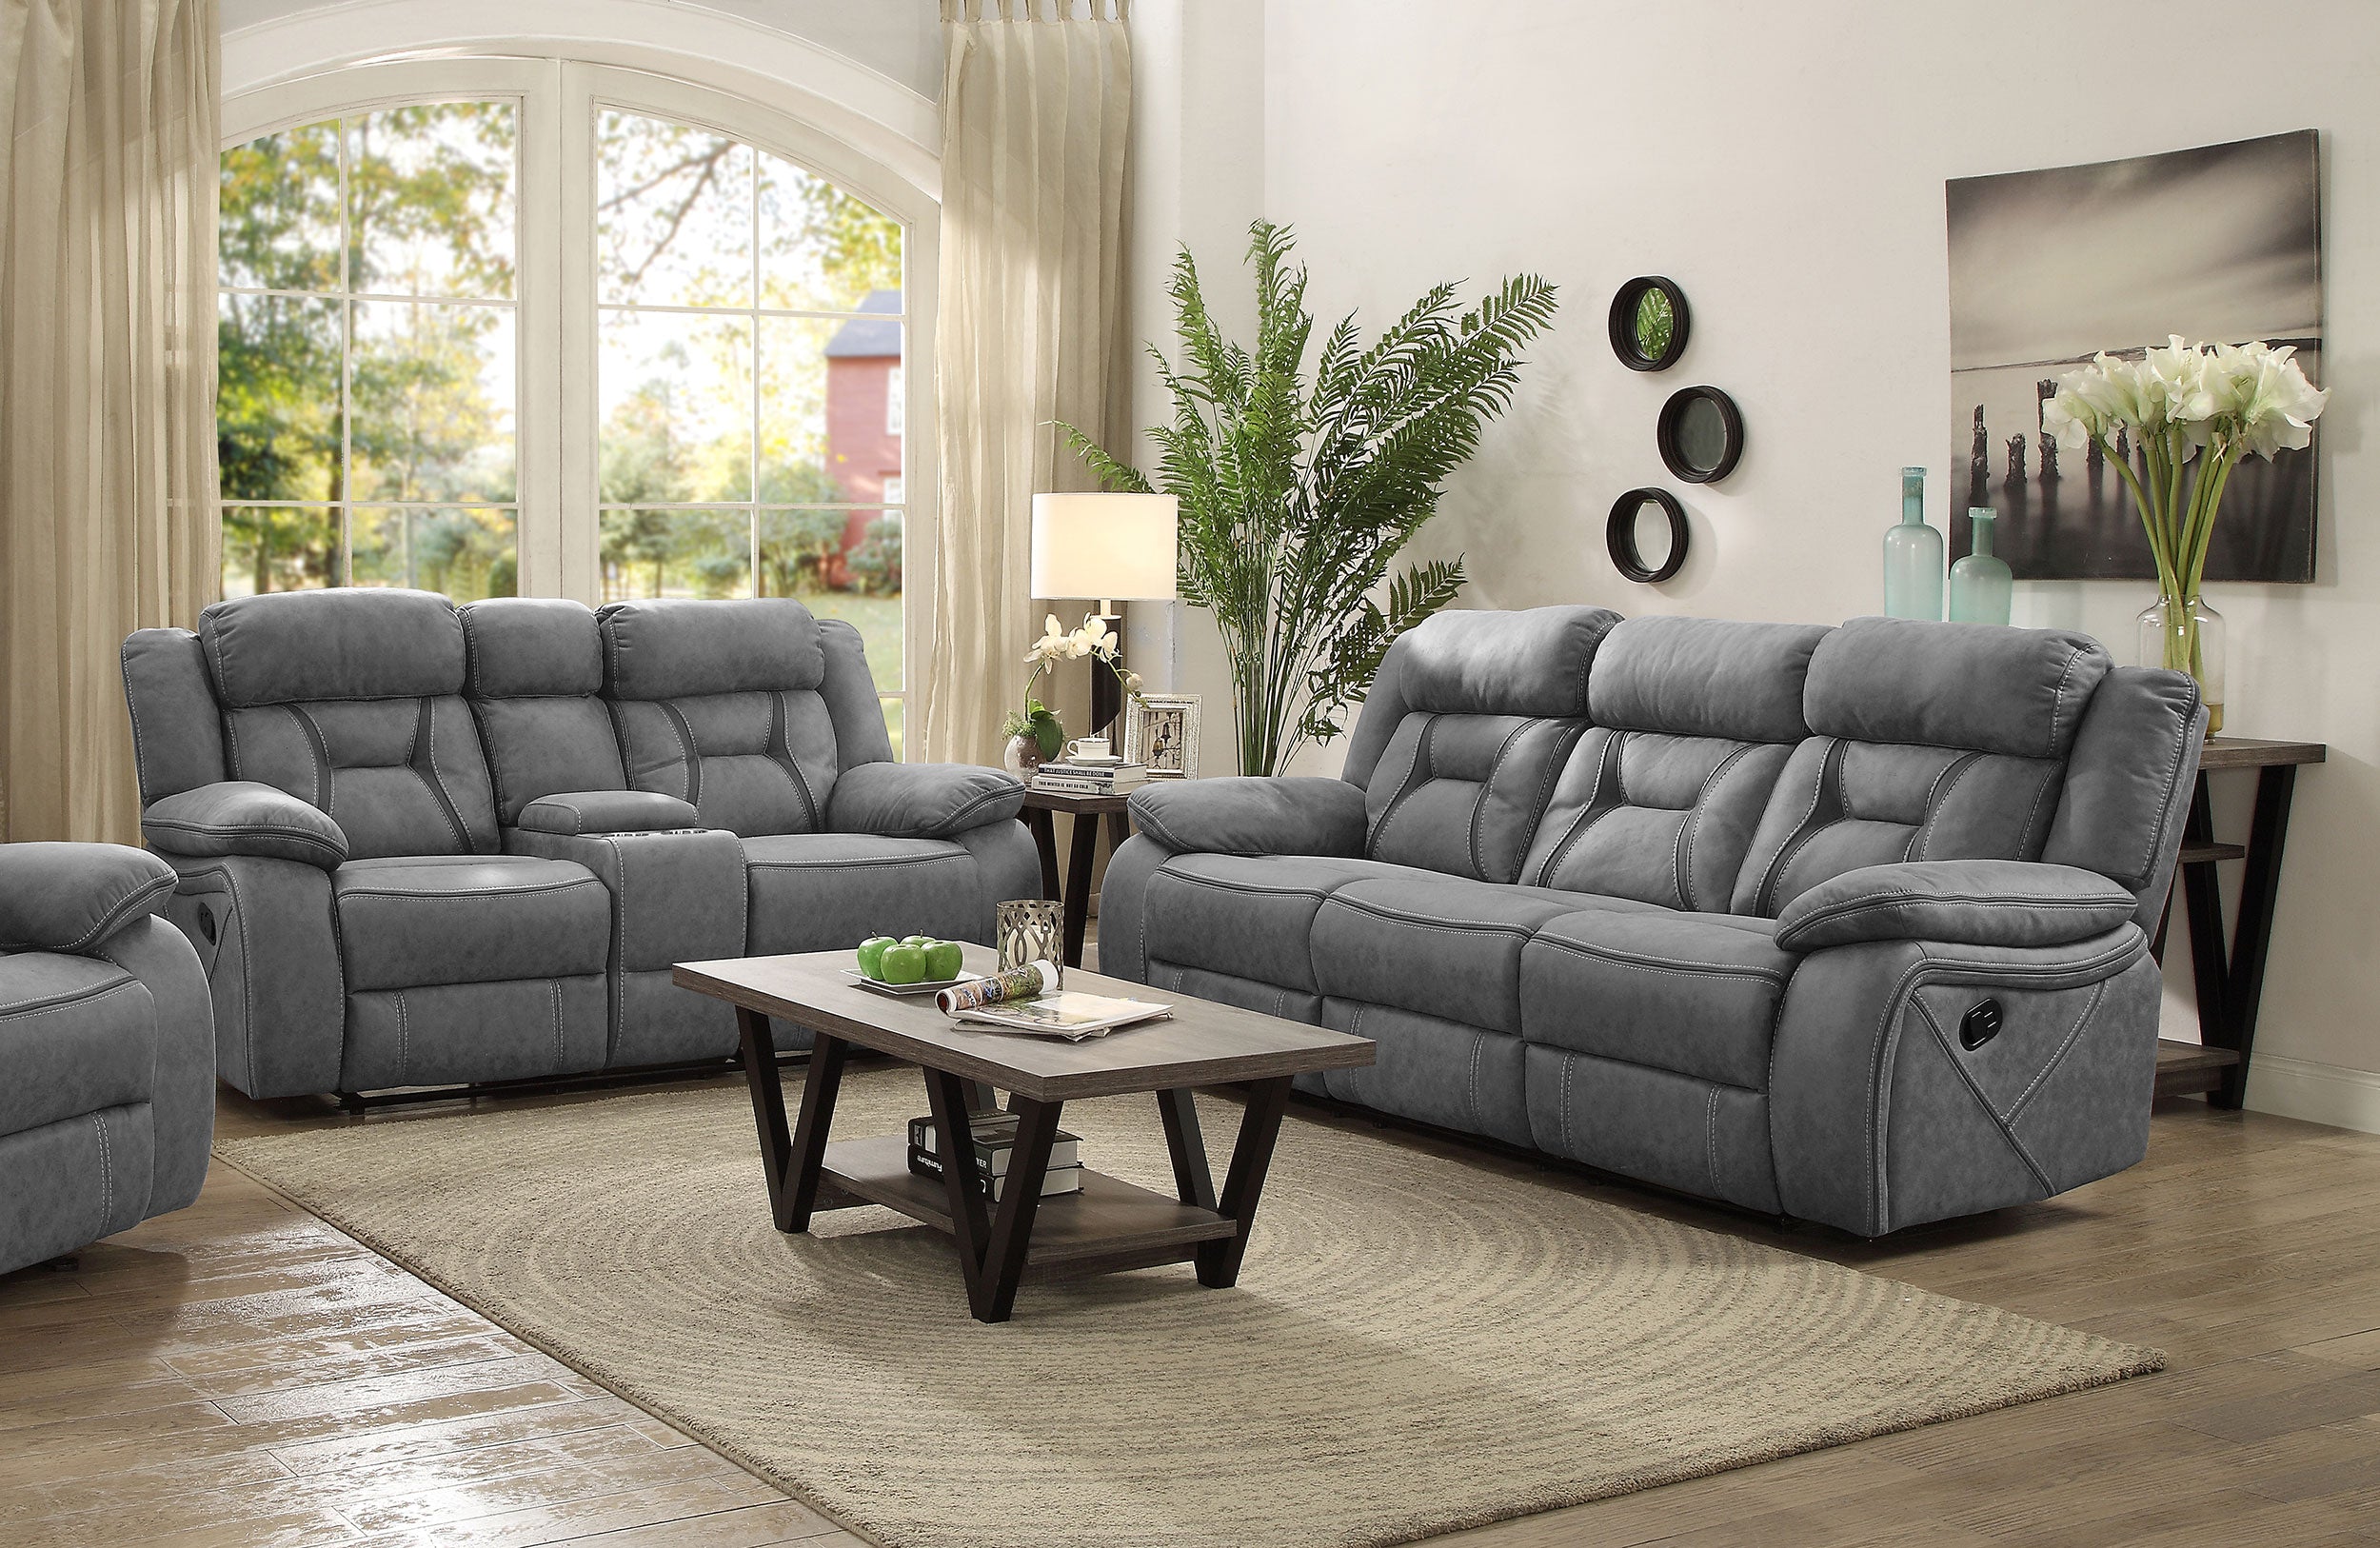 Jamhal Upholstered Tufted Living Room Set Motion Sofa Grey